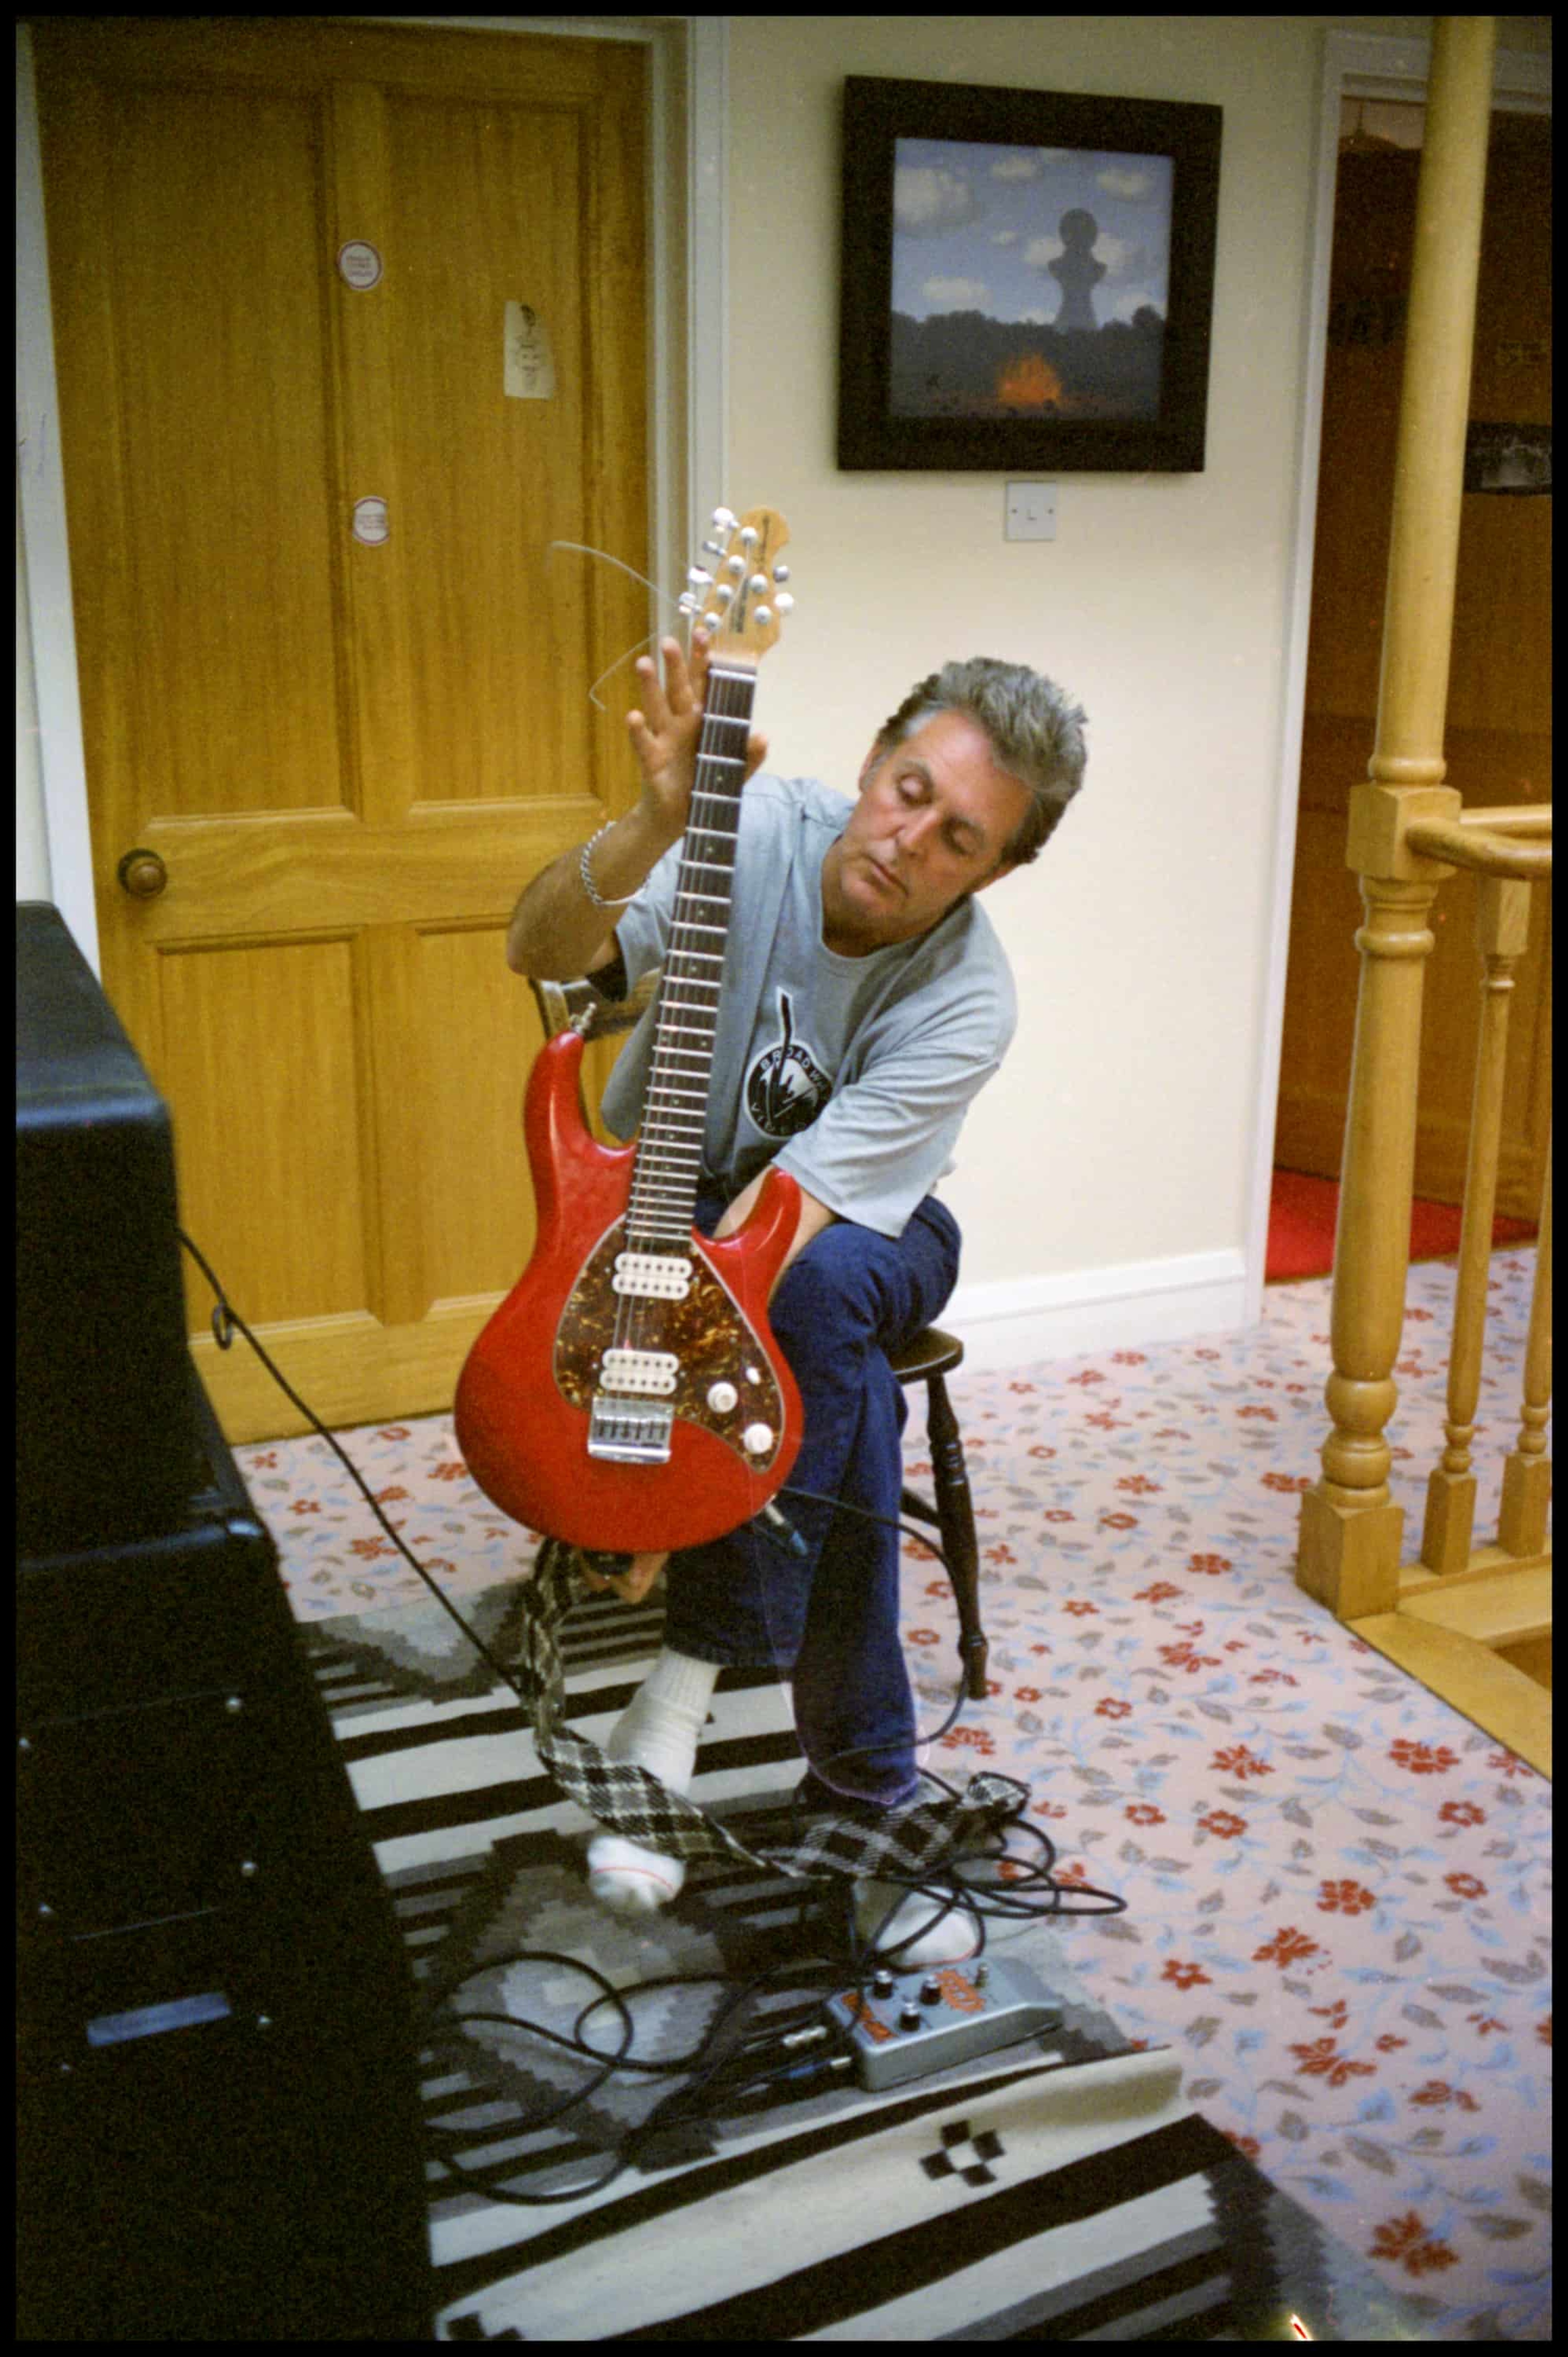 Colour photo of Paul McCartney holding a guitar